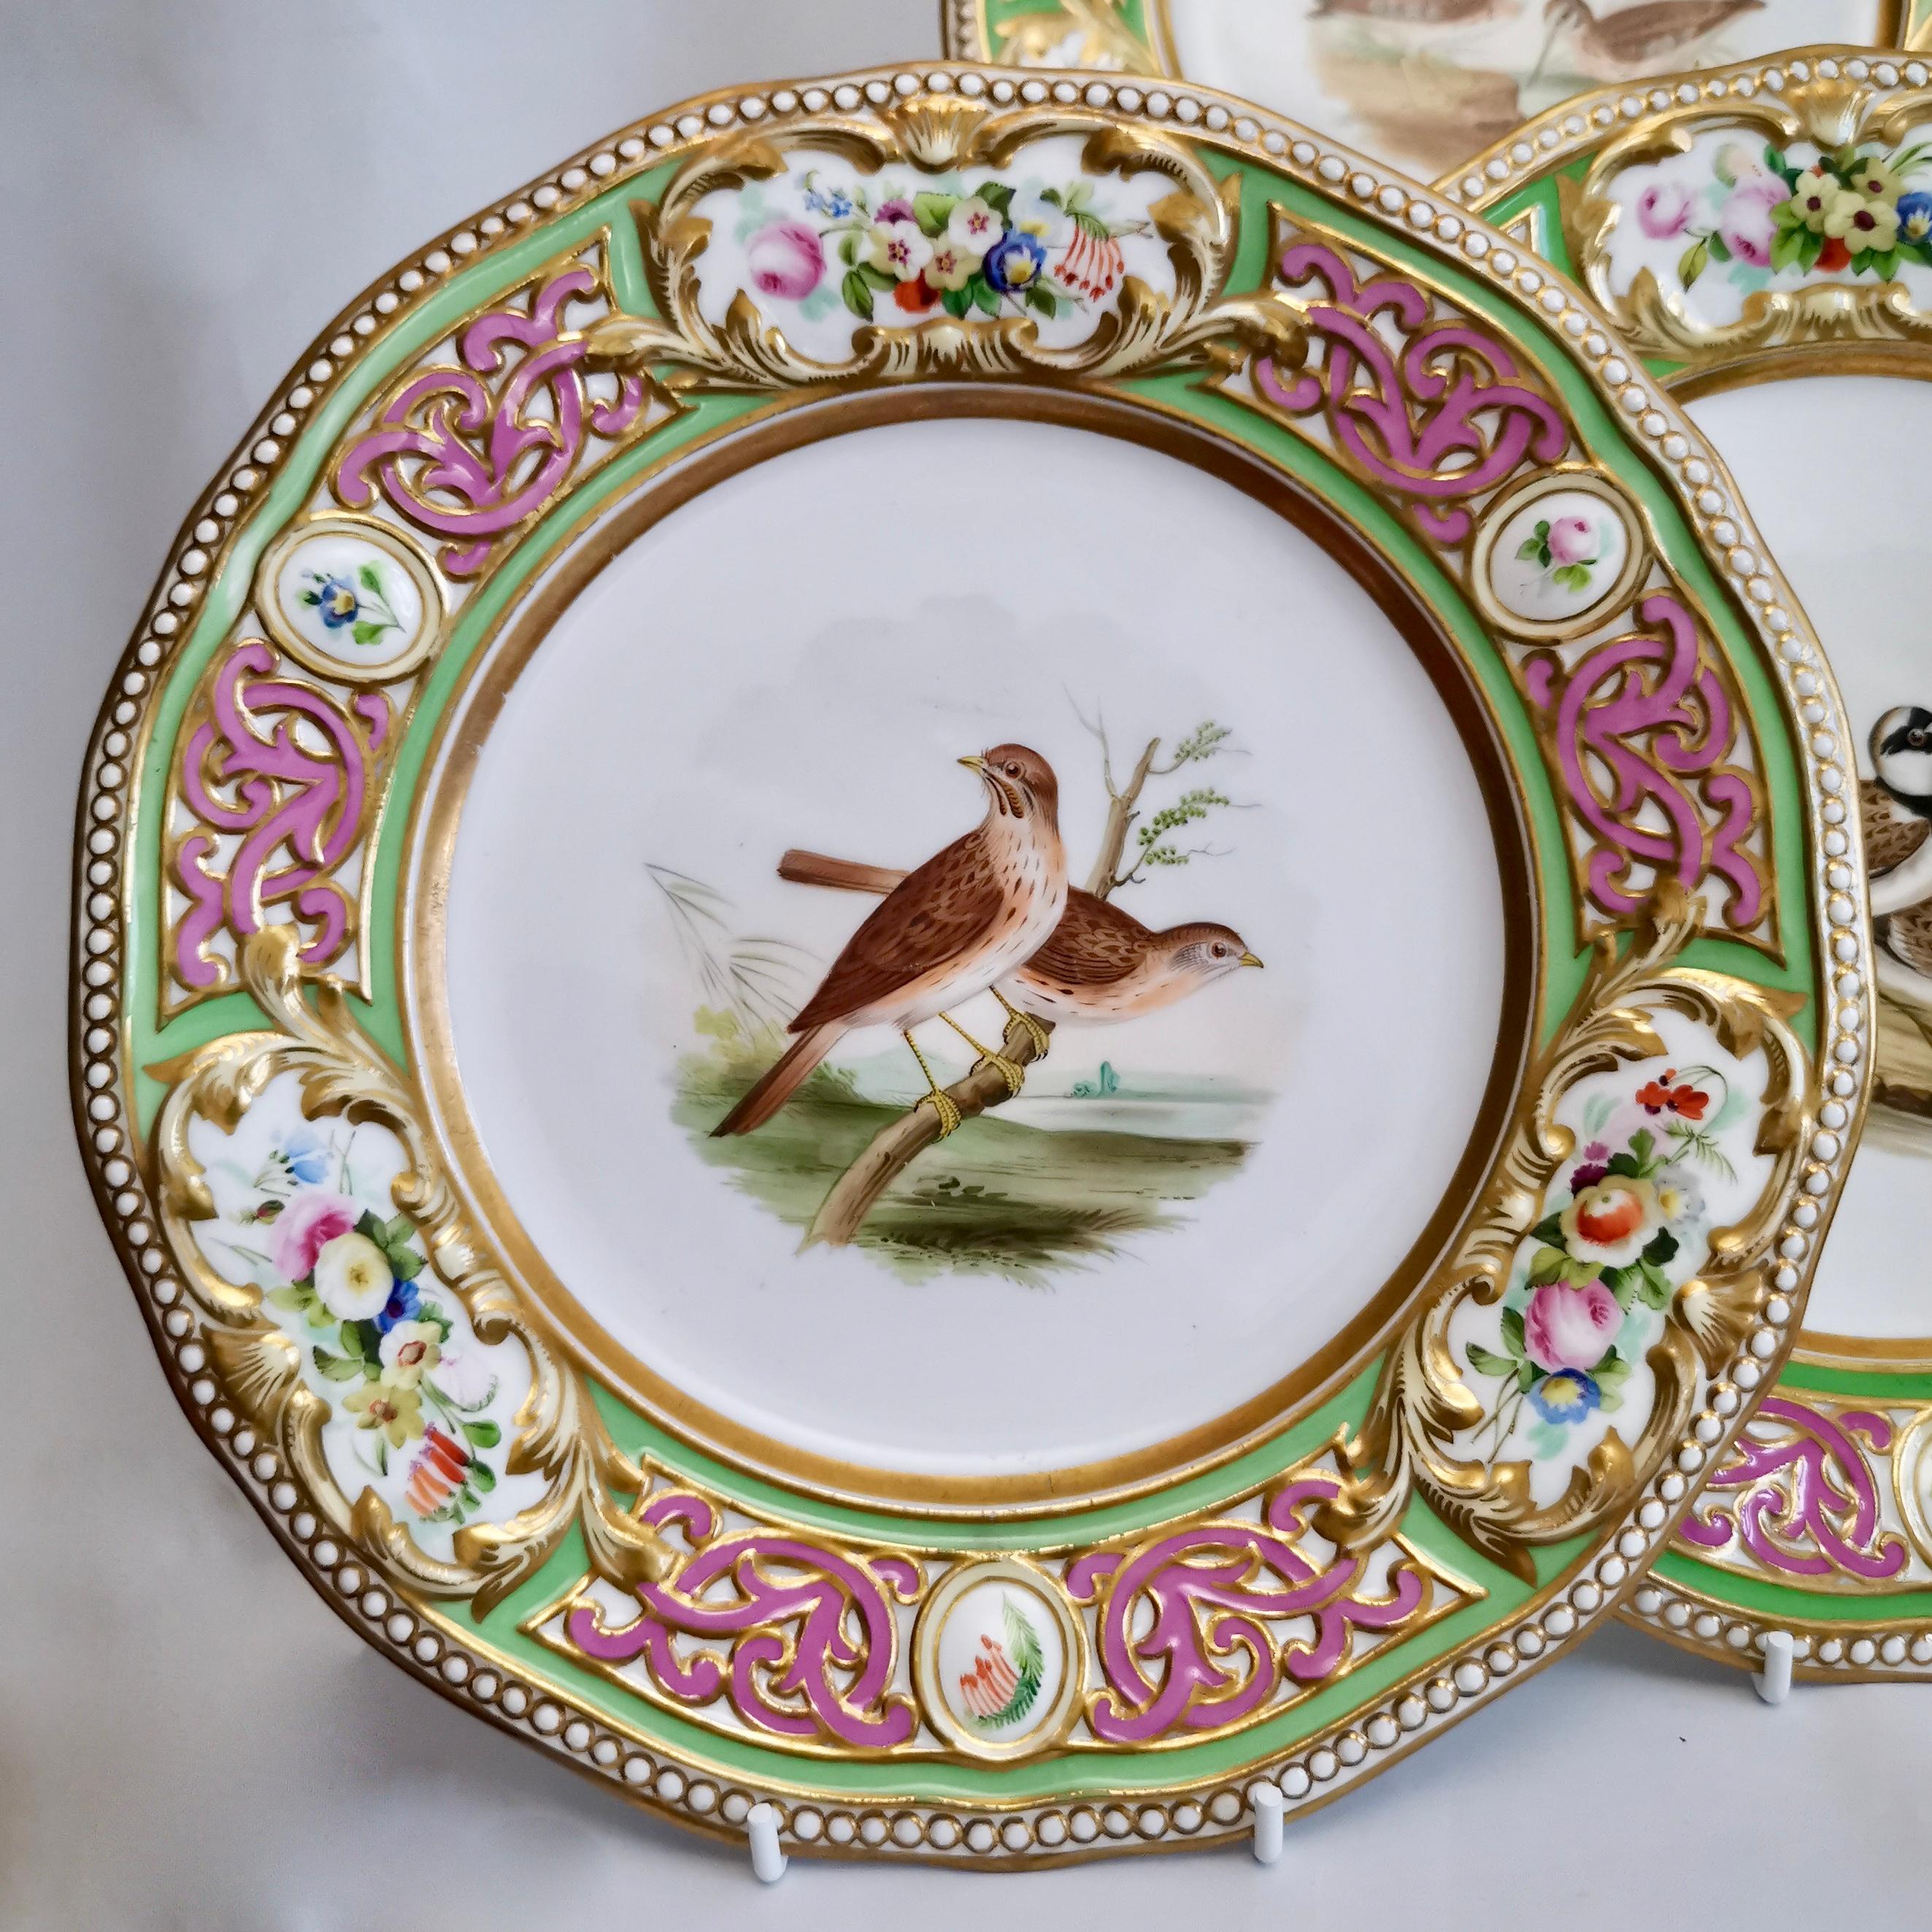 Grainger Worcester Porcelain Dessert Service, Persian Revival with Birds, 1855 1